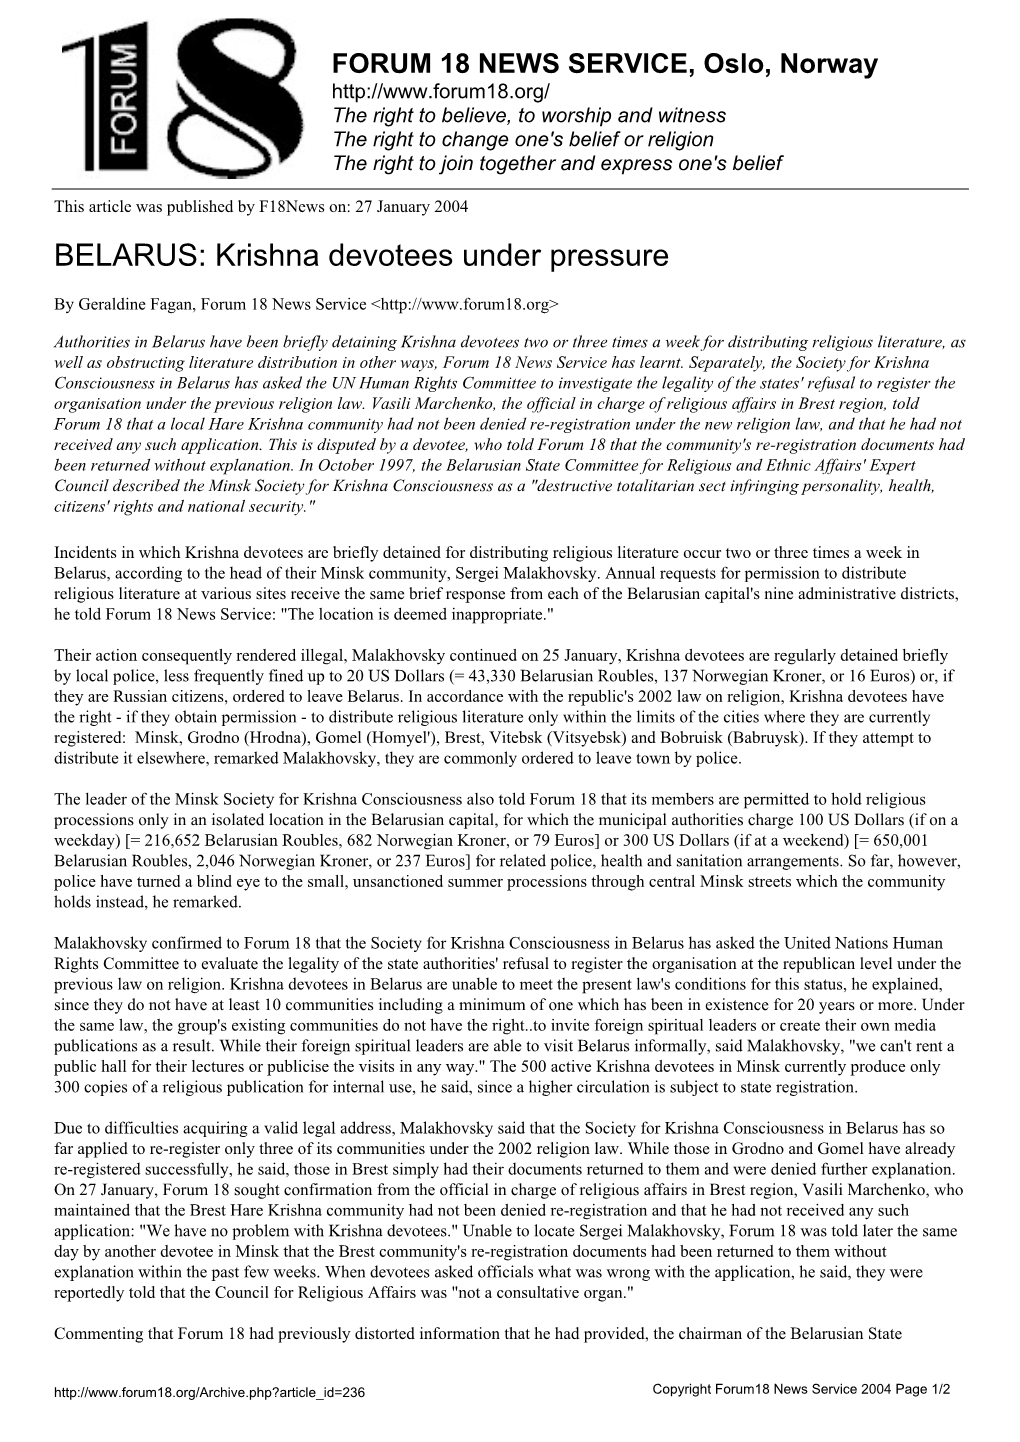 BELARUS: Krishna Devotees Under Pressure